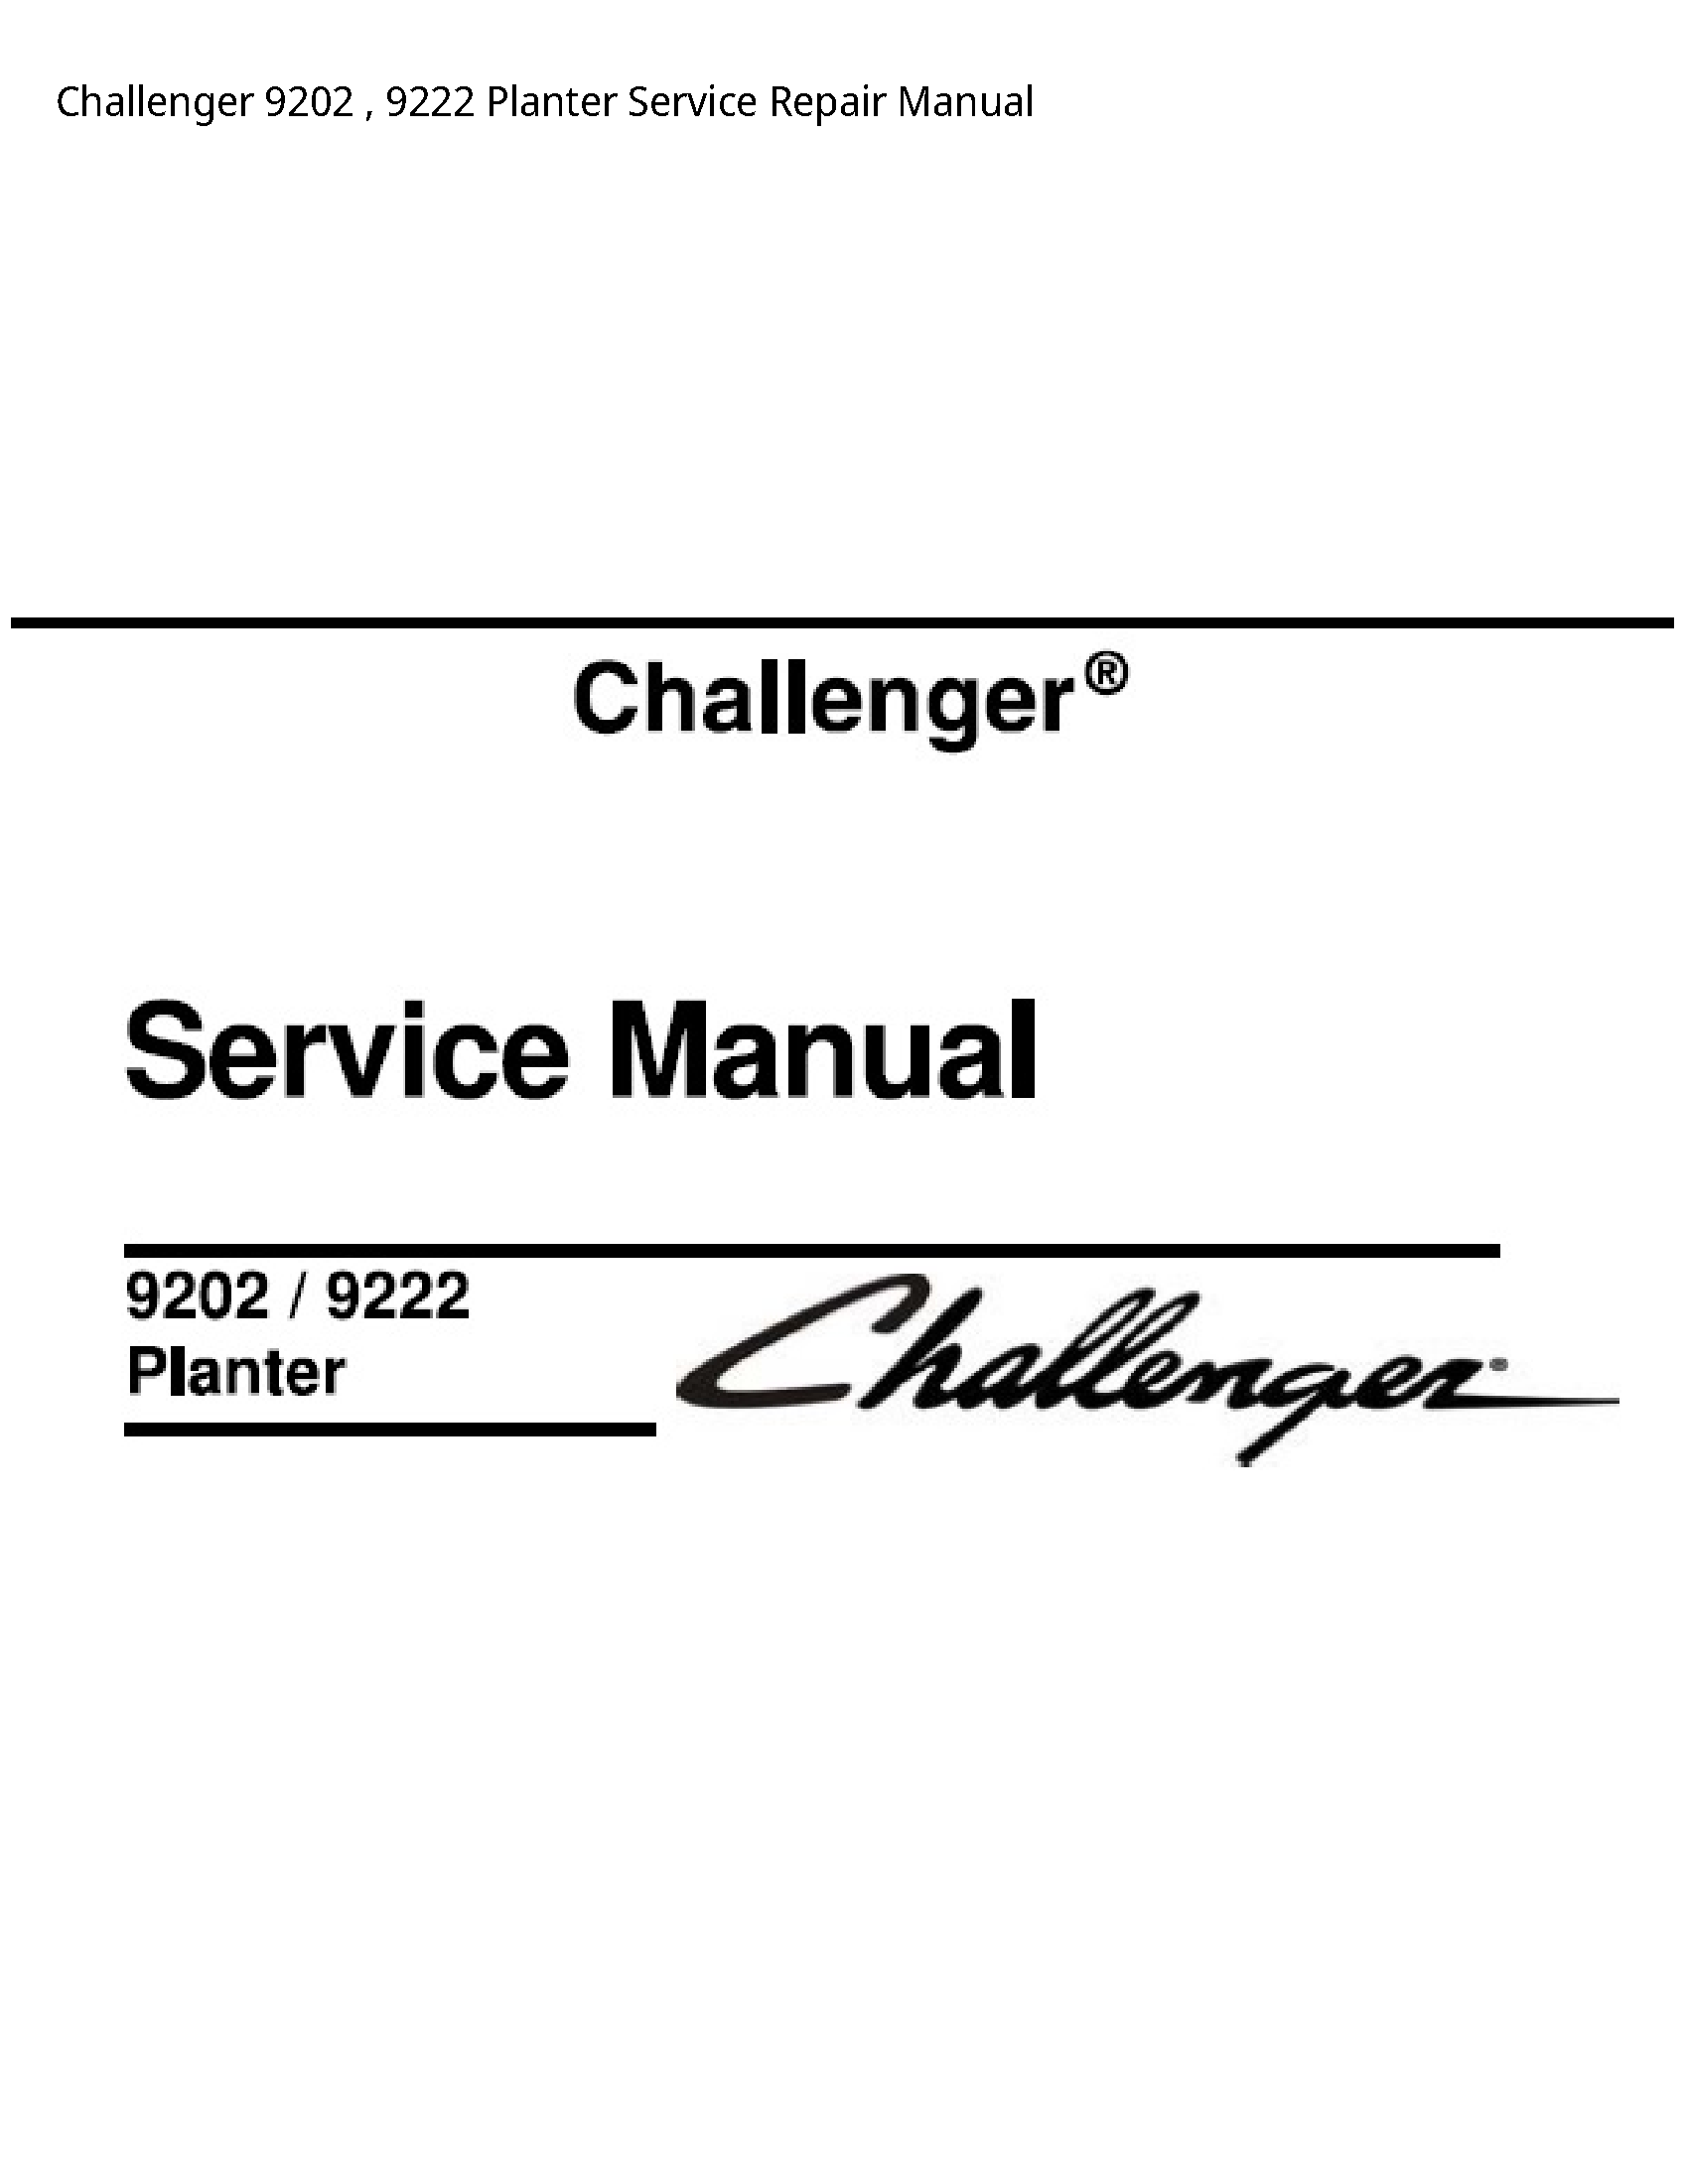 Challenger 9202 Planter manual